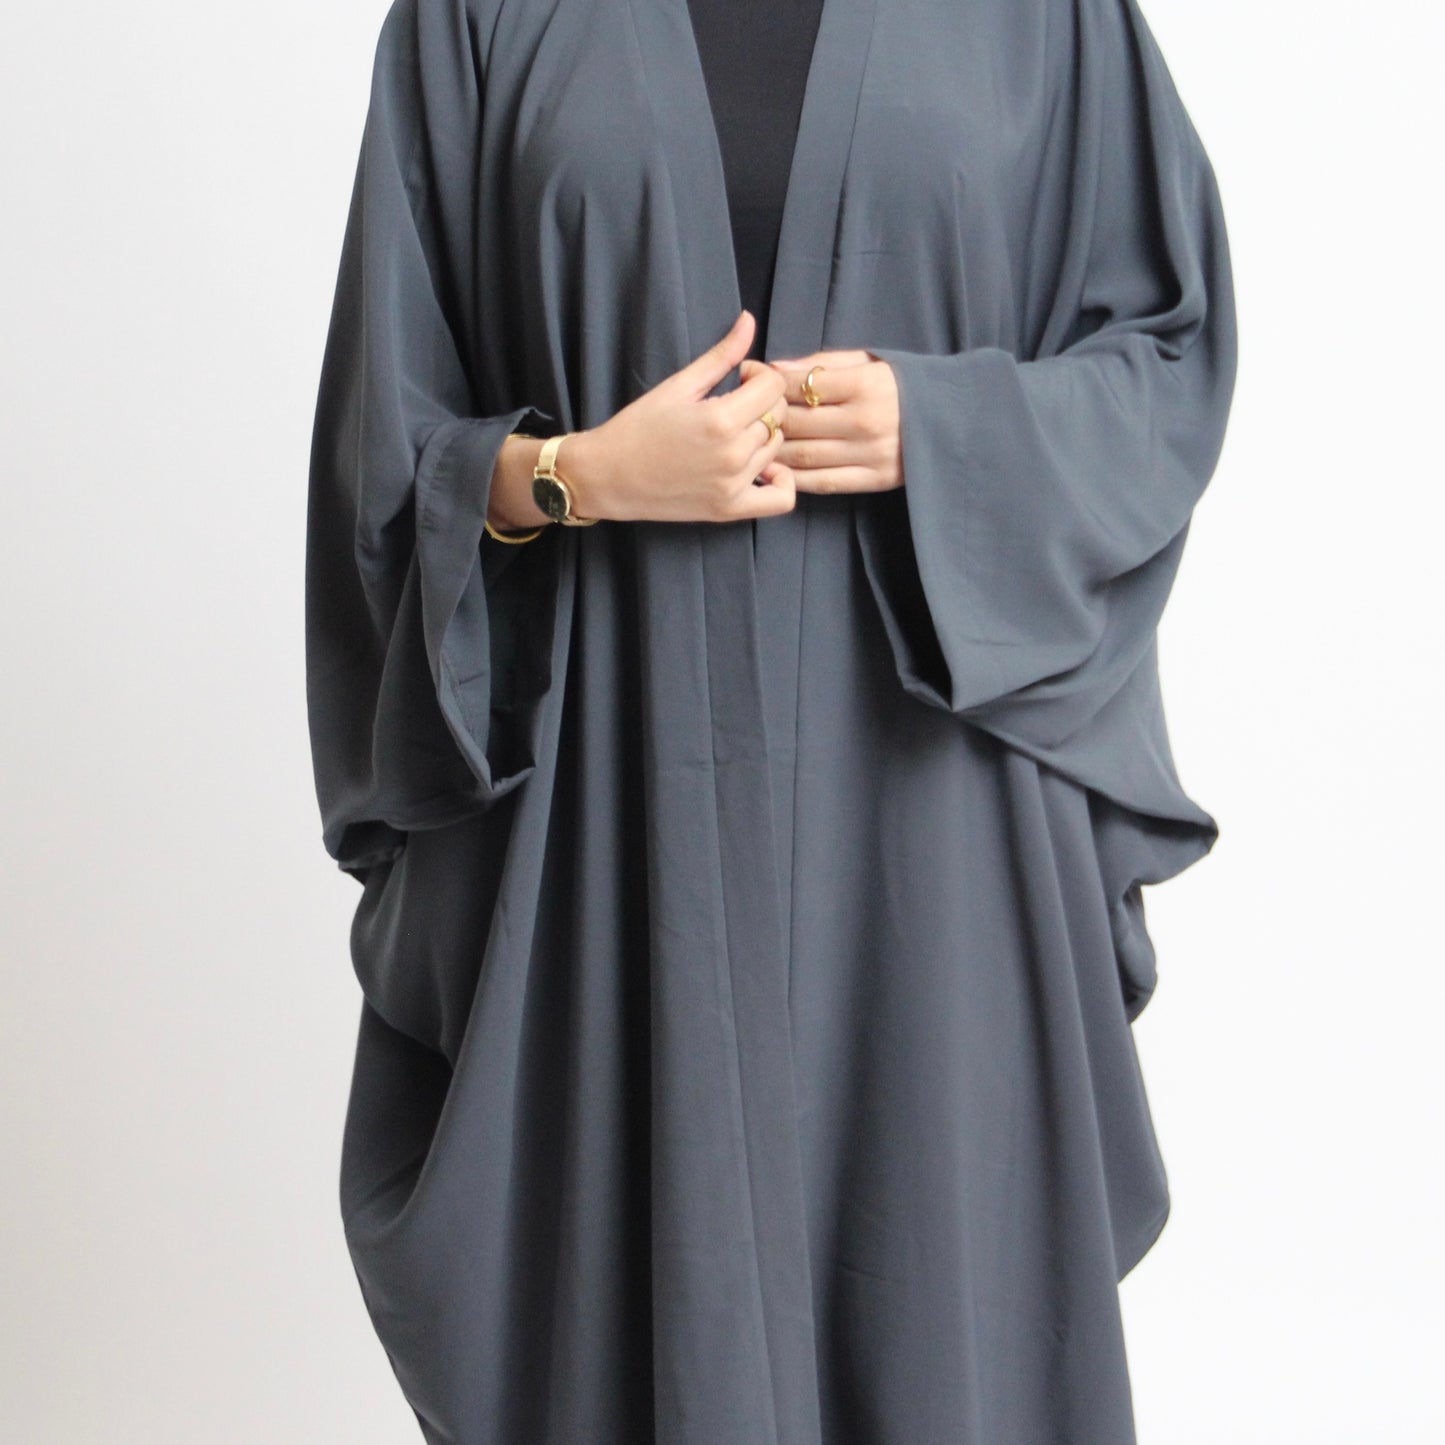 Nahla’s Open Cloak Abaya Teal